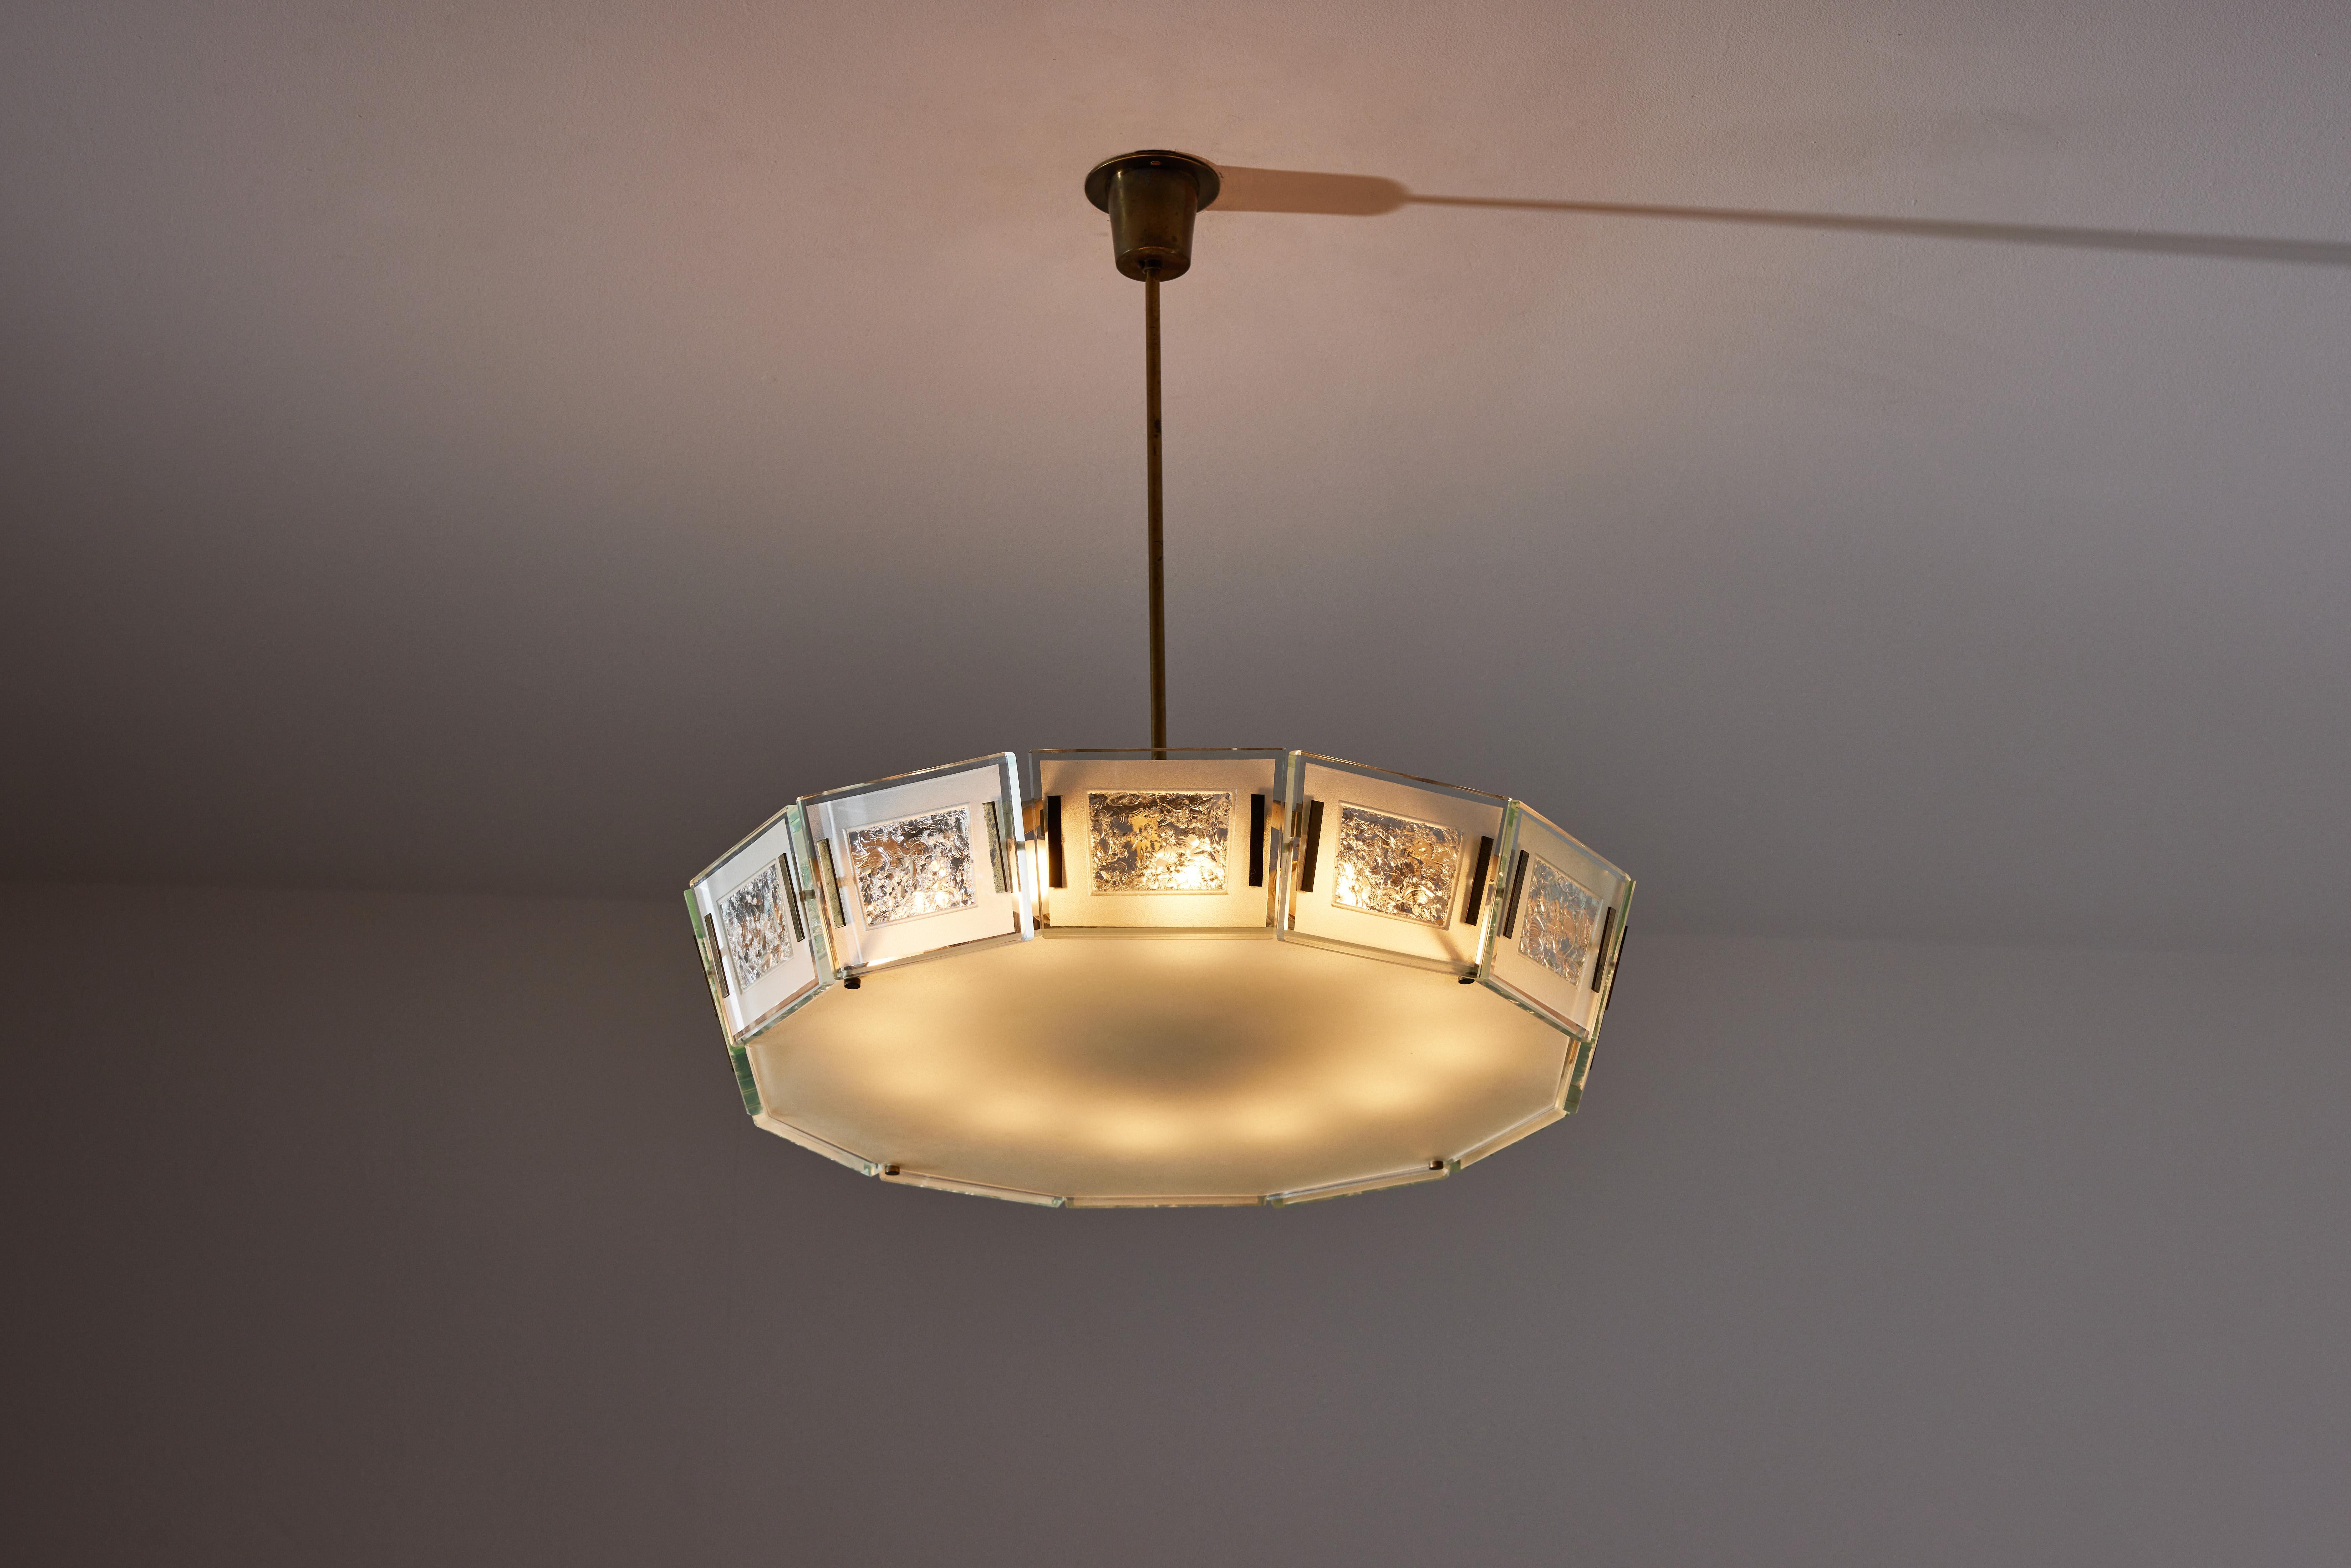 Italian Model 2270 Ceiling Light by Max Ingrand